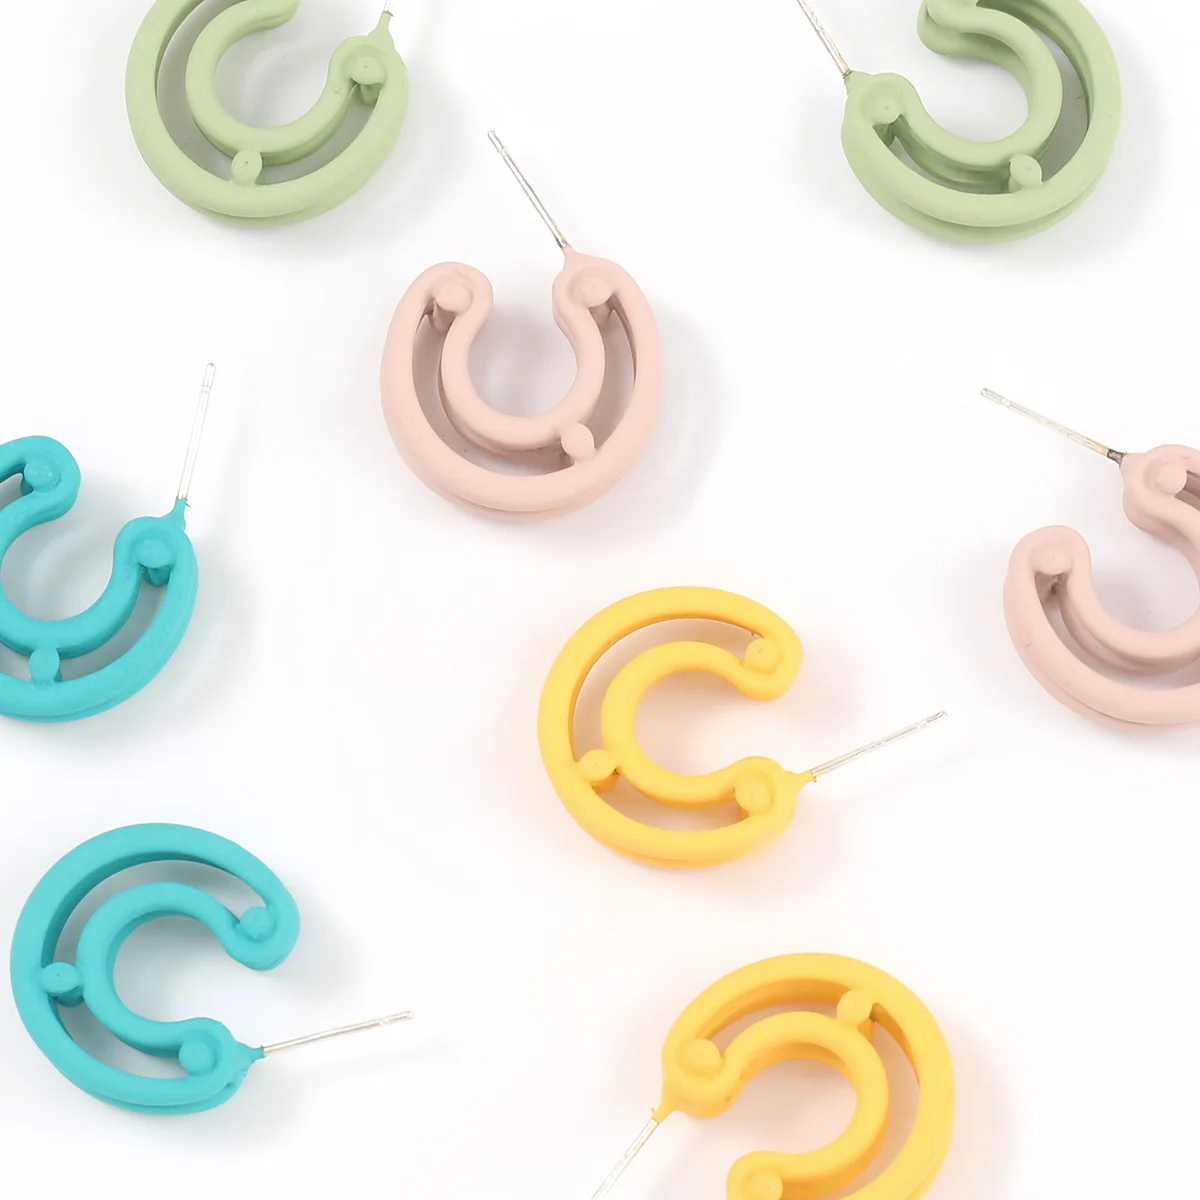 

Shangjie OEM aretes para mujeres C shape cute alloy earrings colorful girl earrings hip hop fashion stud earrings, Gold